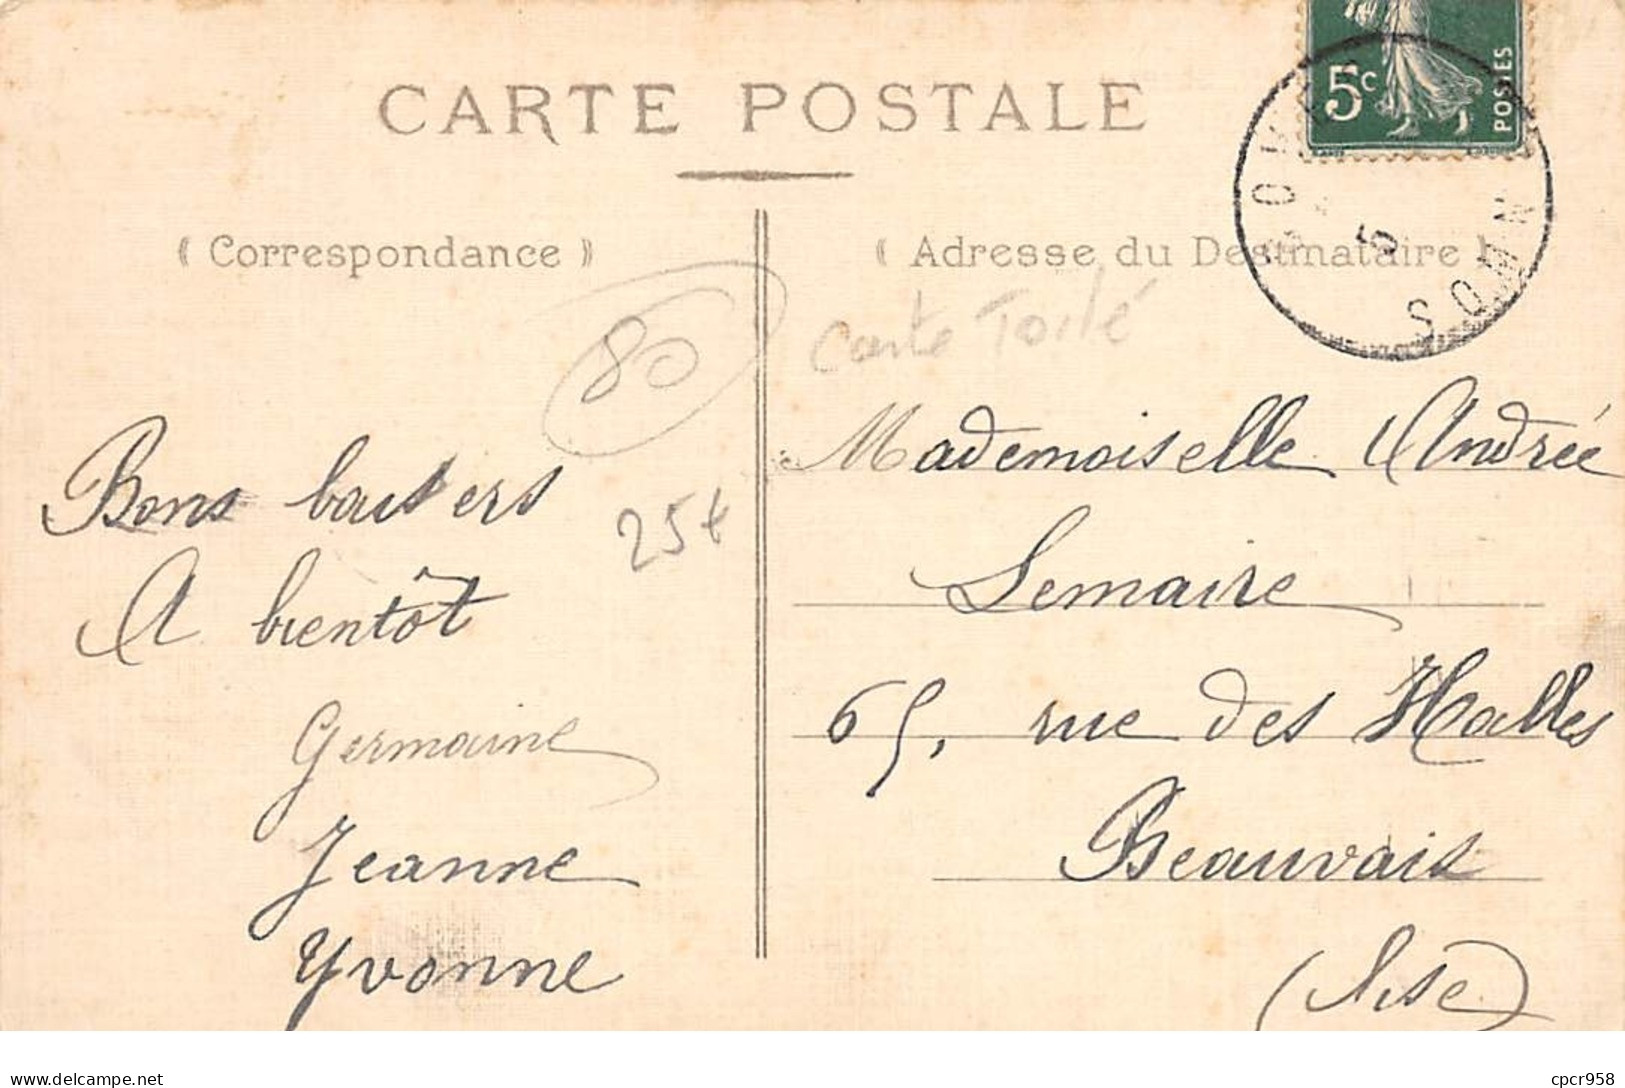 80 .n° 110341 . Boves . Cafe De La Paix .entree De La Rue Victor Hugo .carte Postale Toilee . - Boves